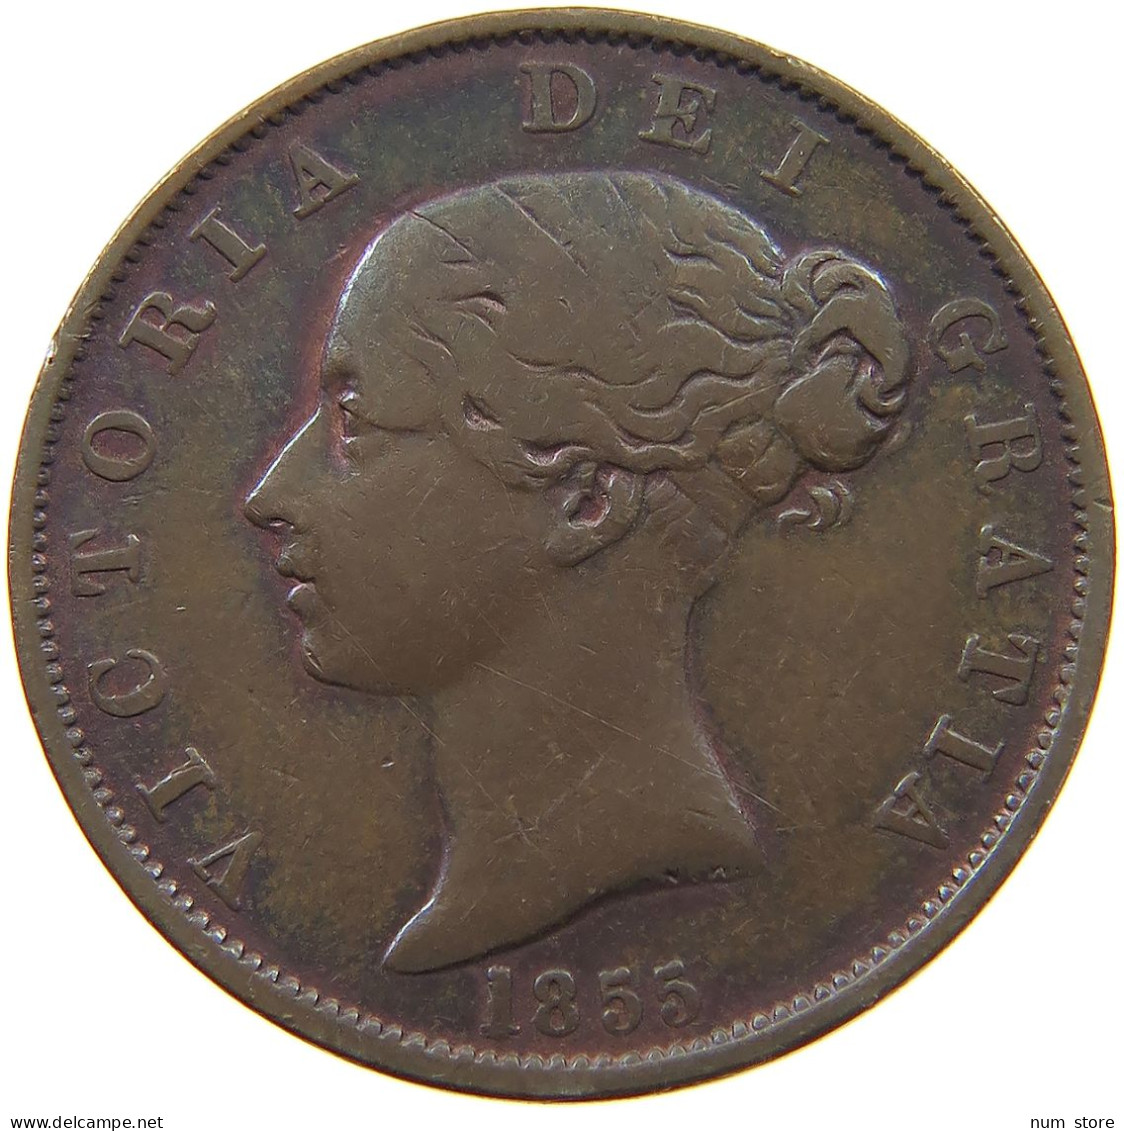 GREAT BRITAIN HALFPENNY 1855 Victoria 1837-1901 #t100 0425 - C. 1/2 Penny